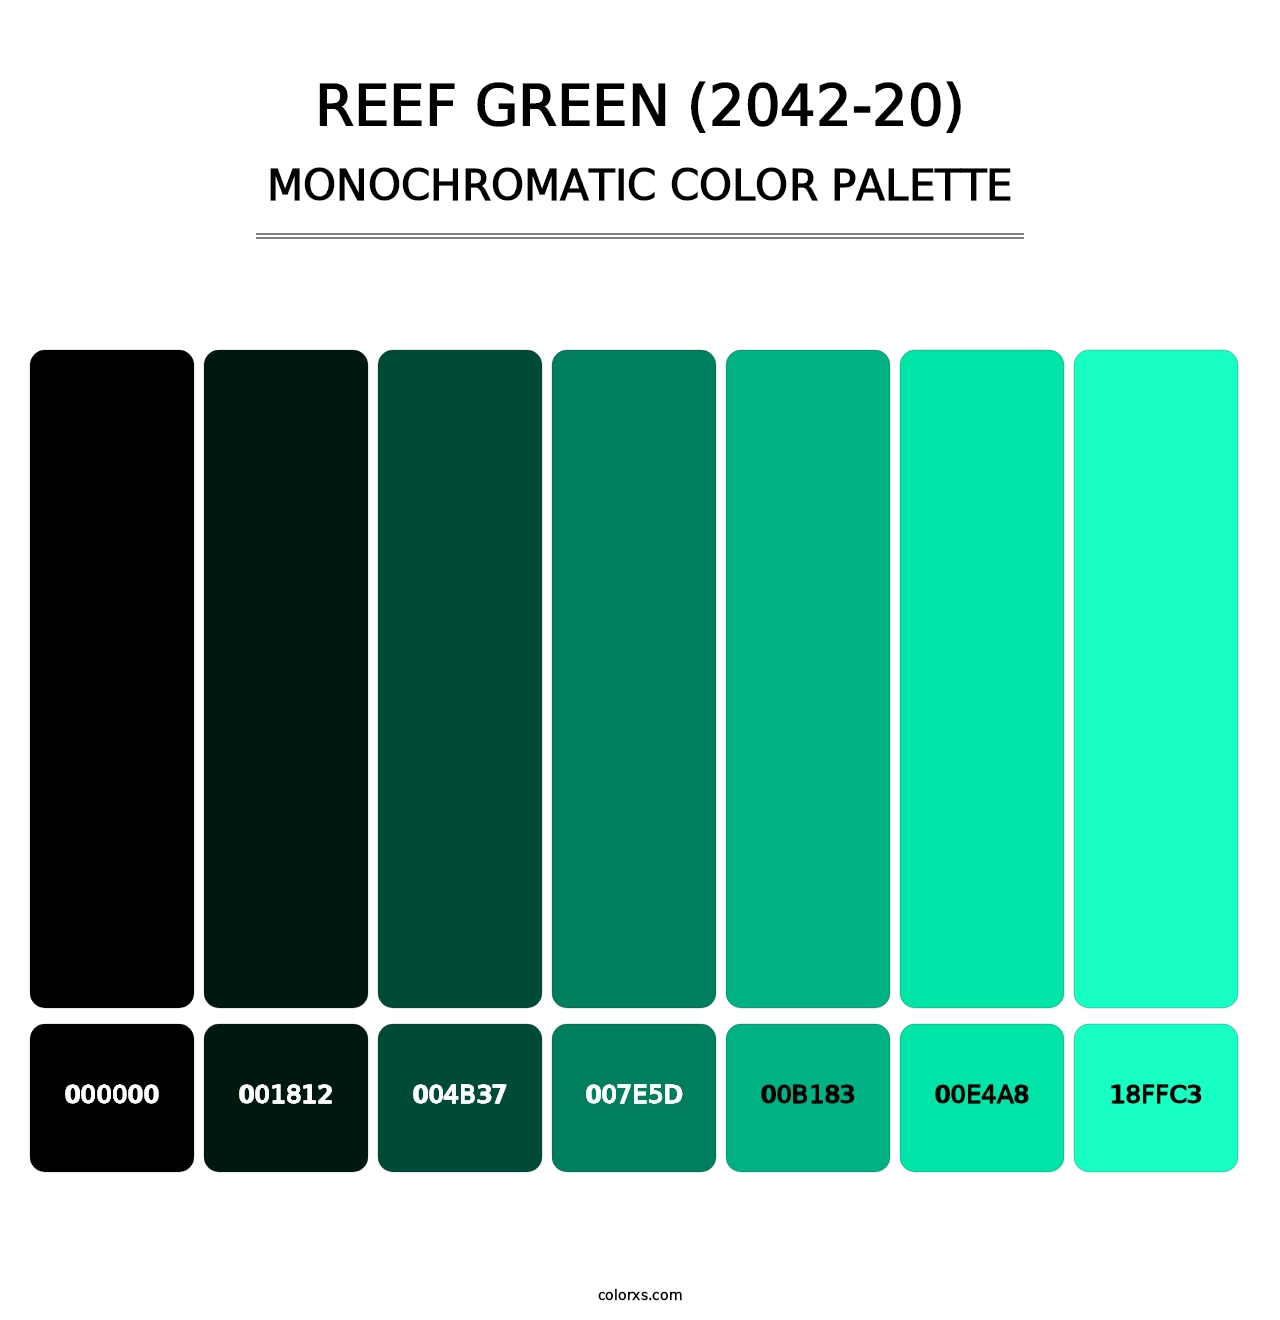 Reef Green (2042-20) - Monochromatic Color Palette